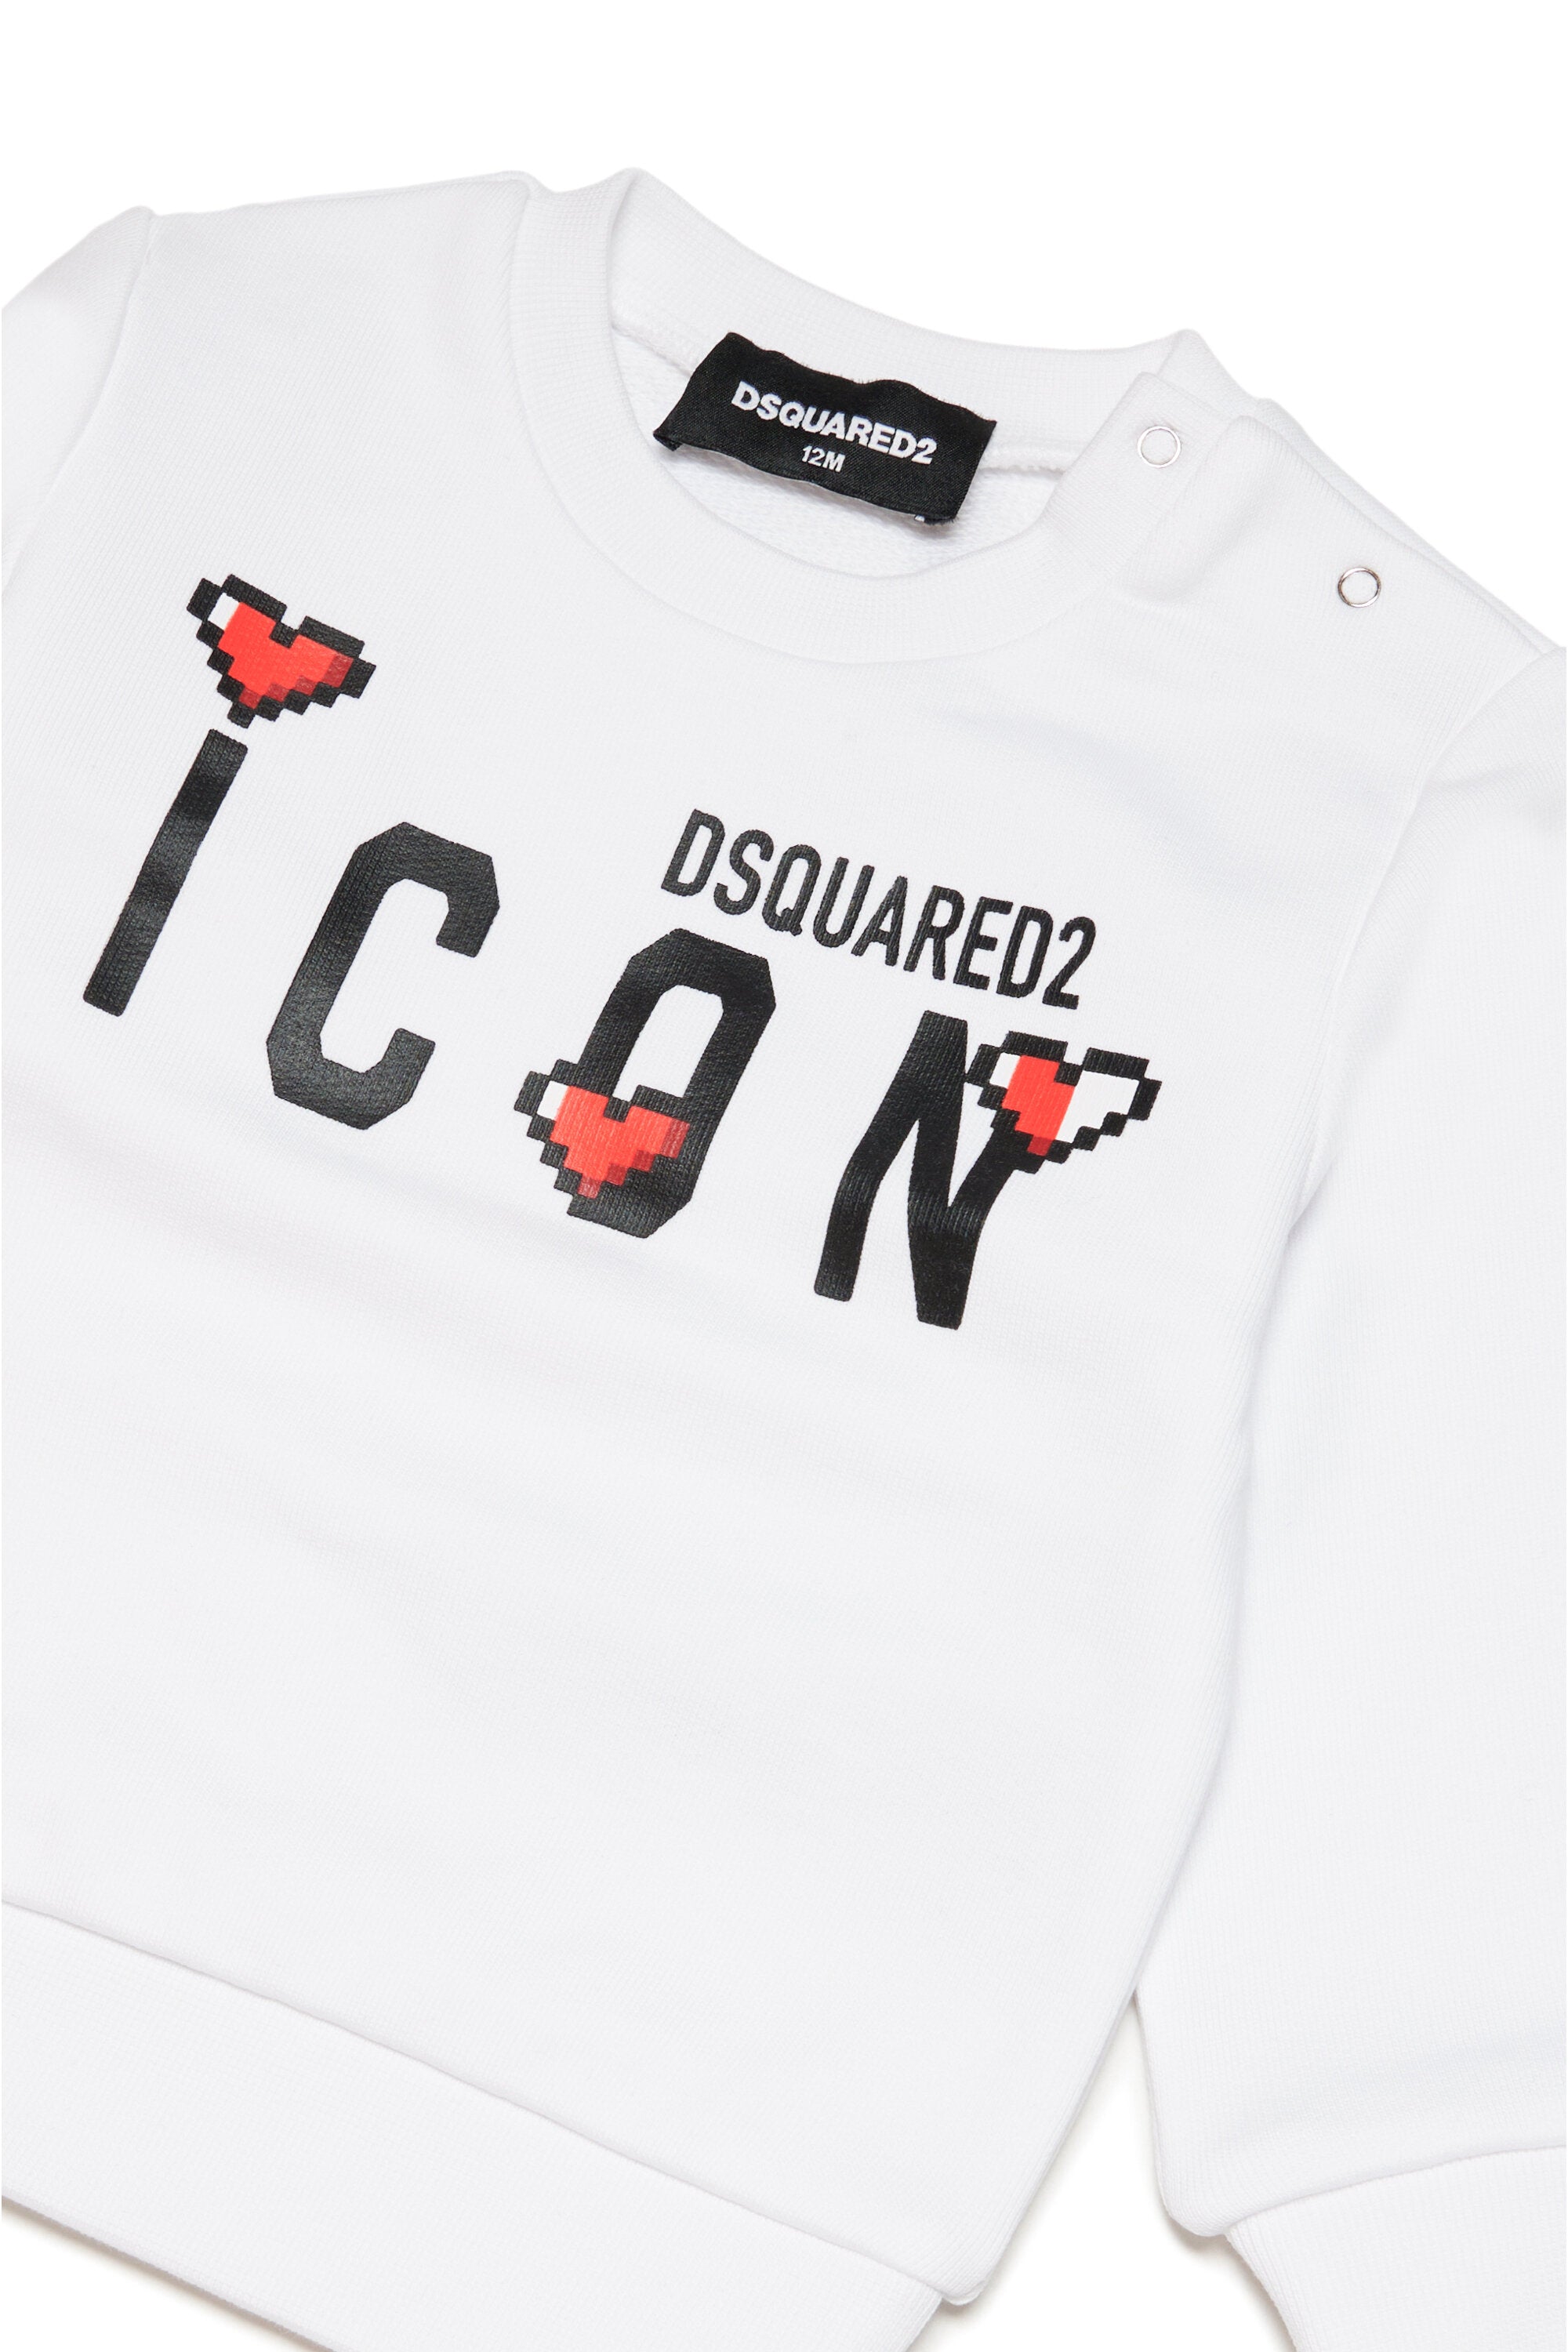 Cotton crew-neck sweatshirt with Icon logo and hearts